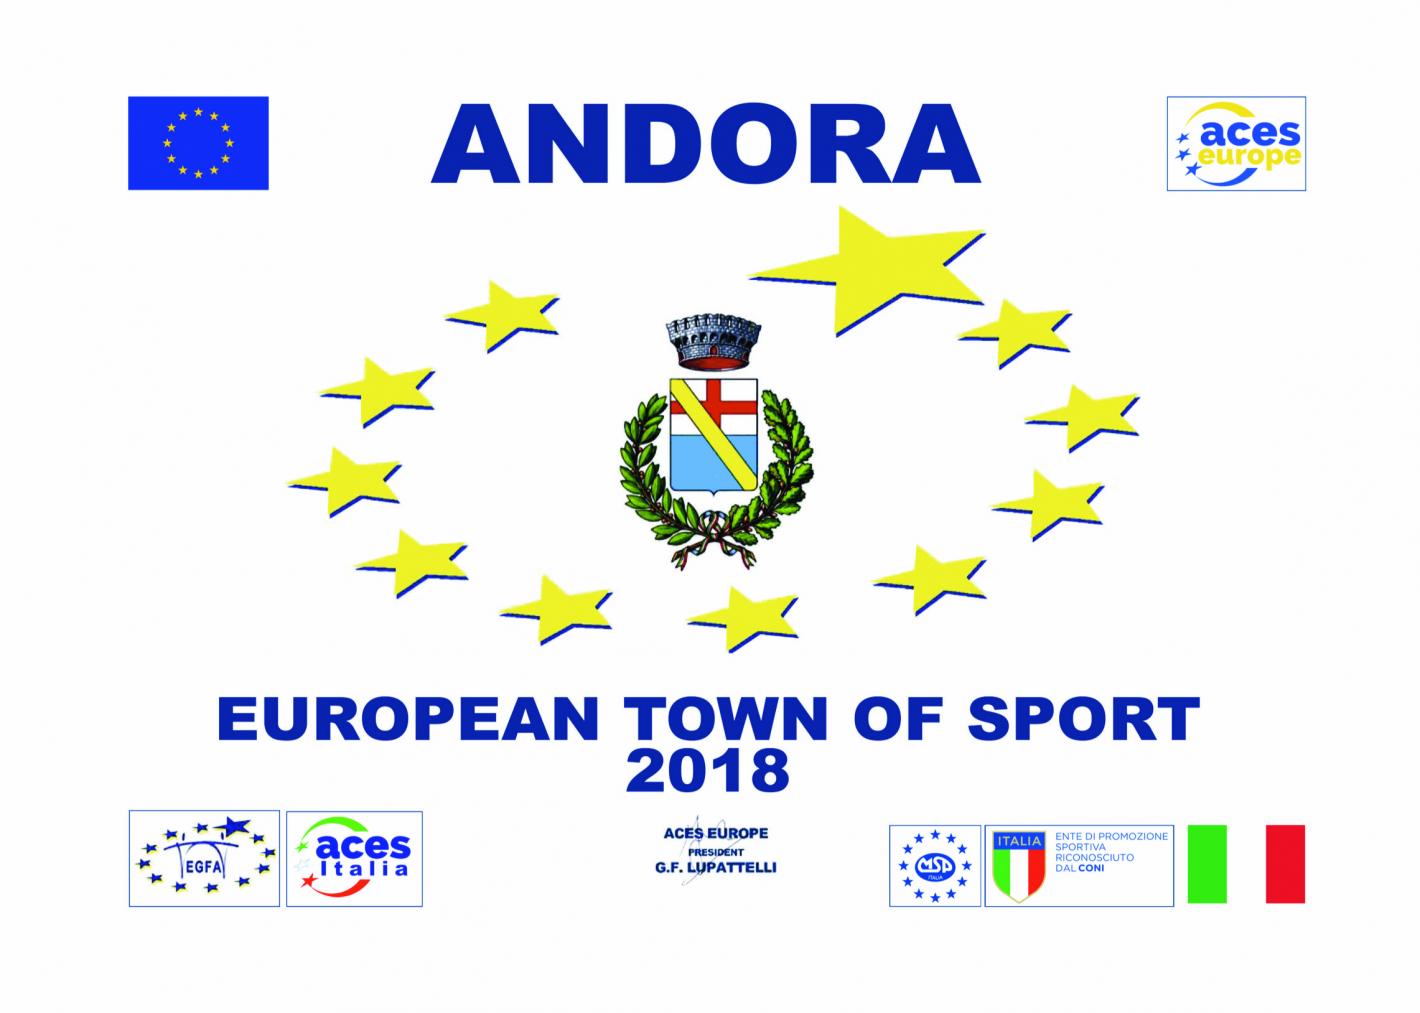 images/2018/gare/andora/medium/logo_comune_europeo_dello_sport_2018.jpg